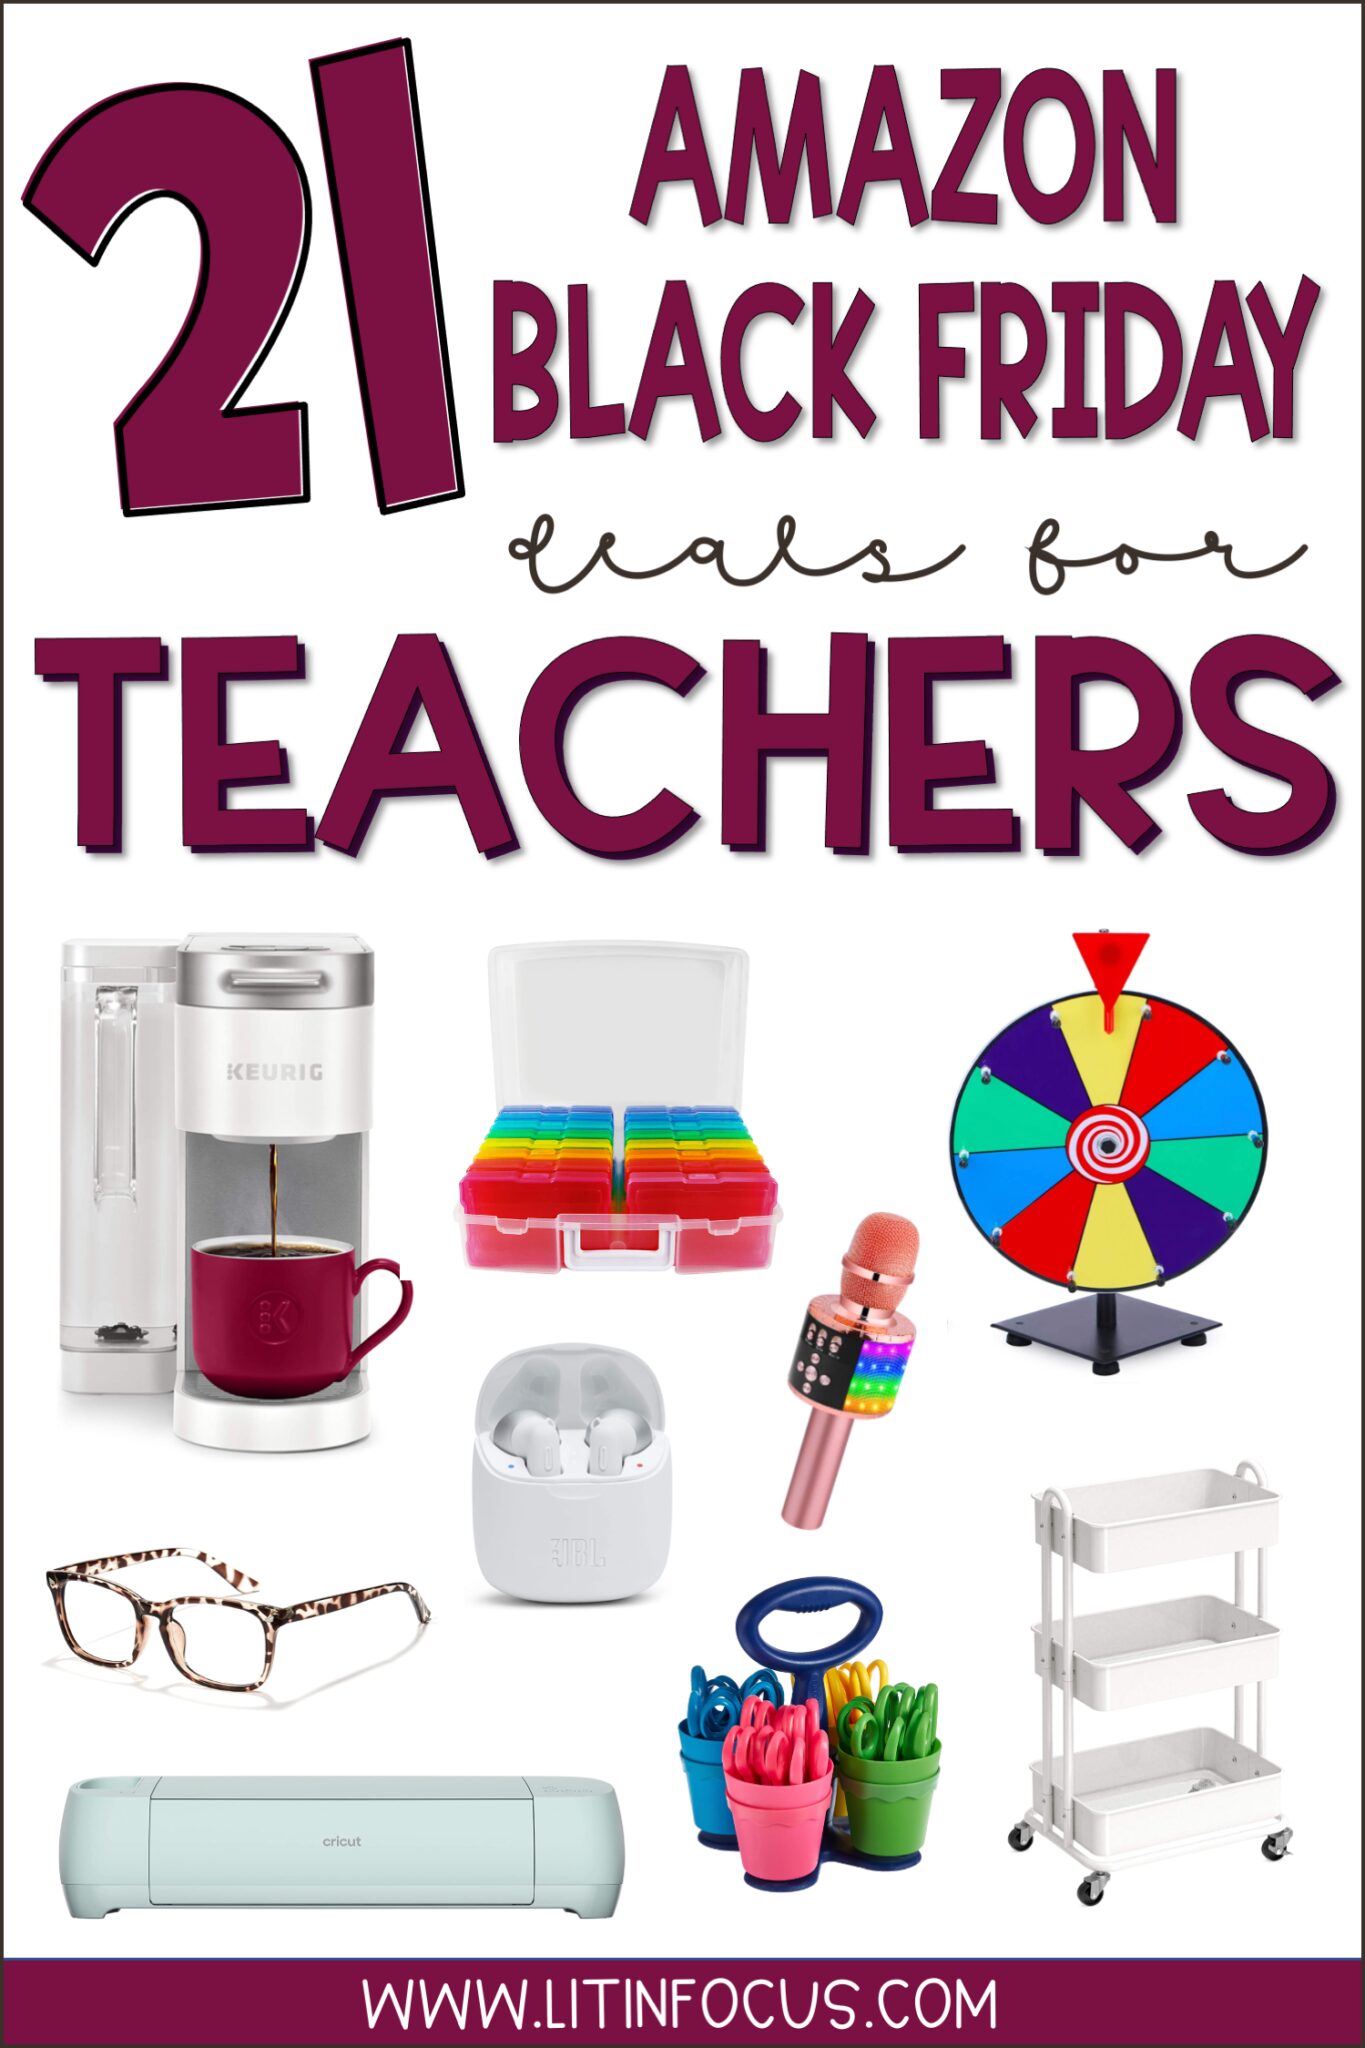 21 Amazon Black Friday Deals for Teachers